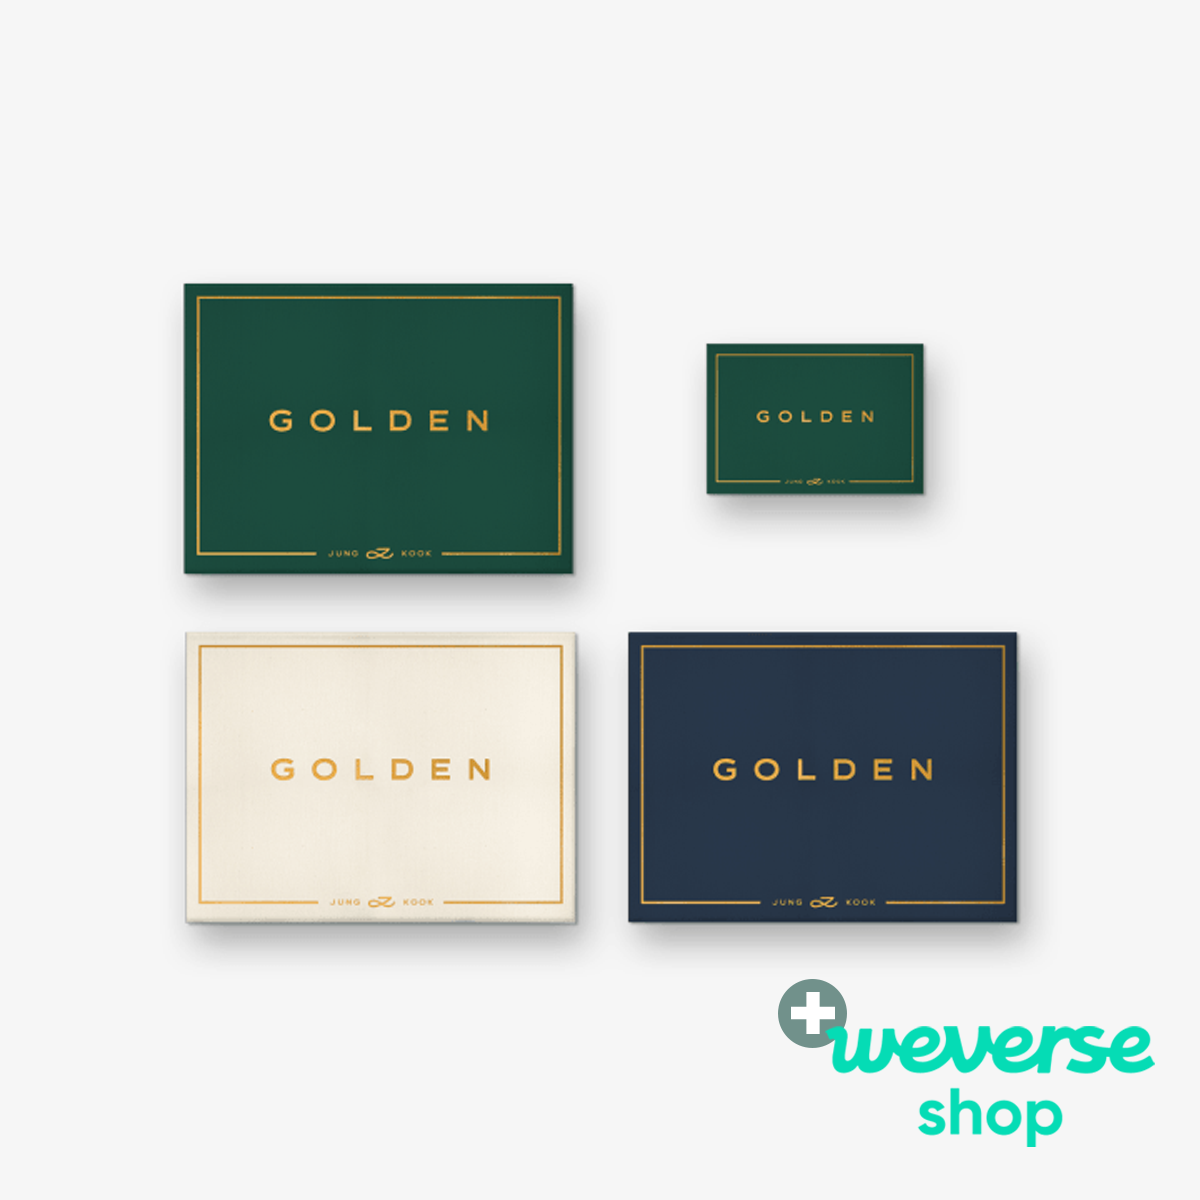 Jung Kook (BTS) - GOLDEN (FULL SET (Standard ver. 3EA + Weverse Albums ver.)) + Weverse Shop P.O.B "Restock"